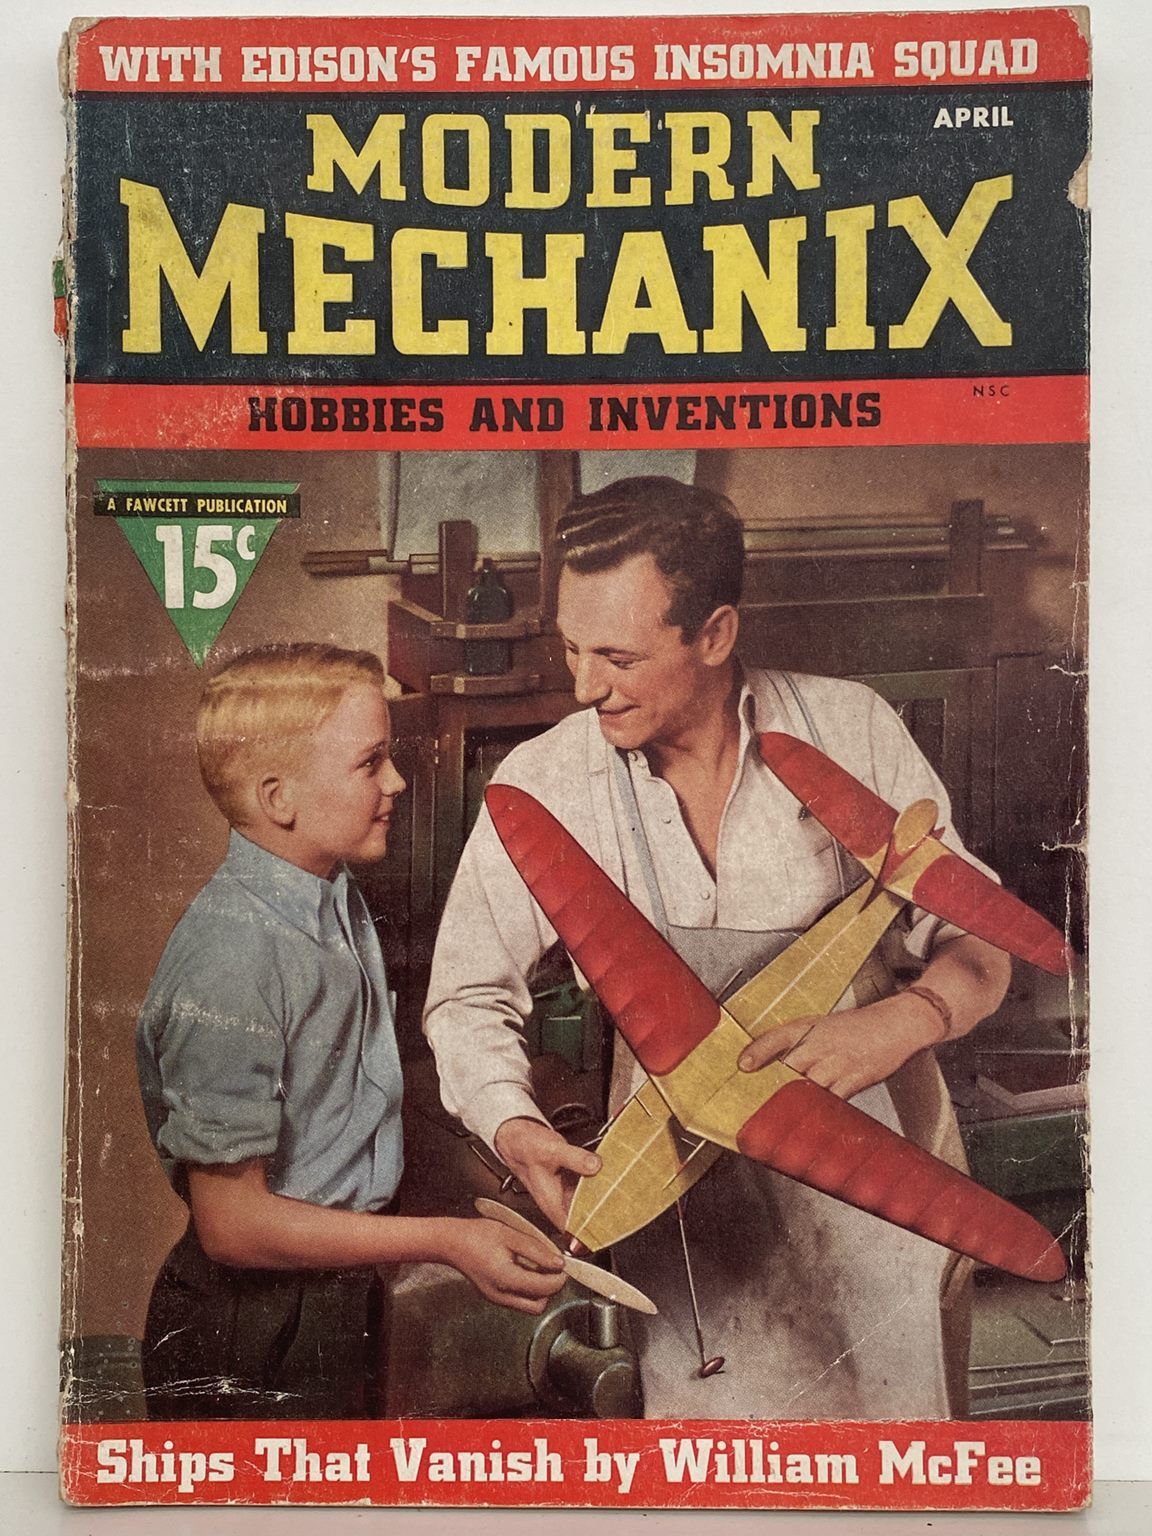 VINTAGE MAGAZINE: Modern Mechanix and Inventions - Vol 17, No. 6 - April 1937